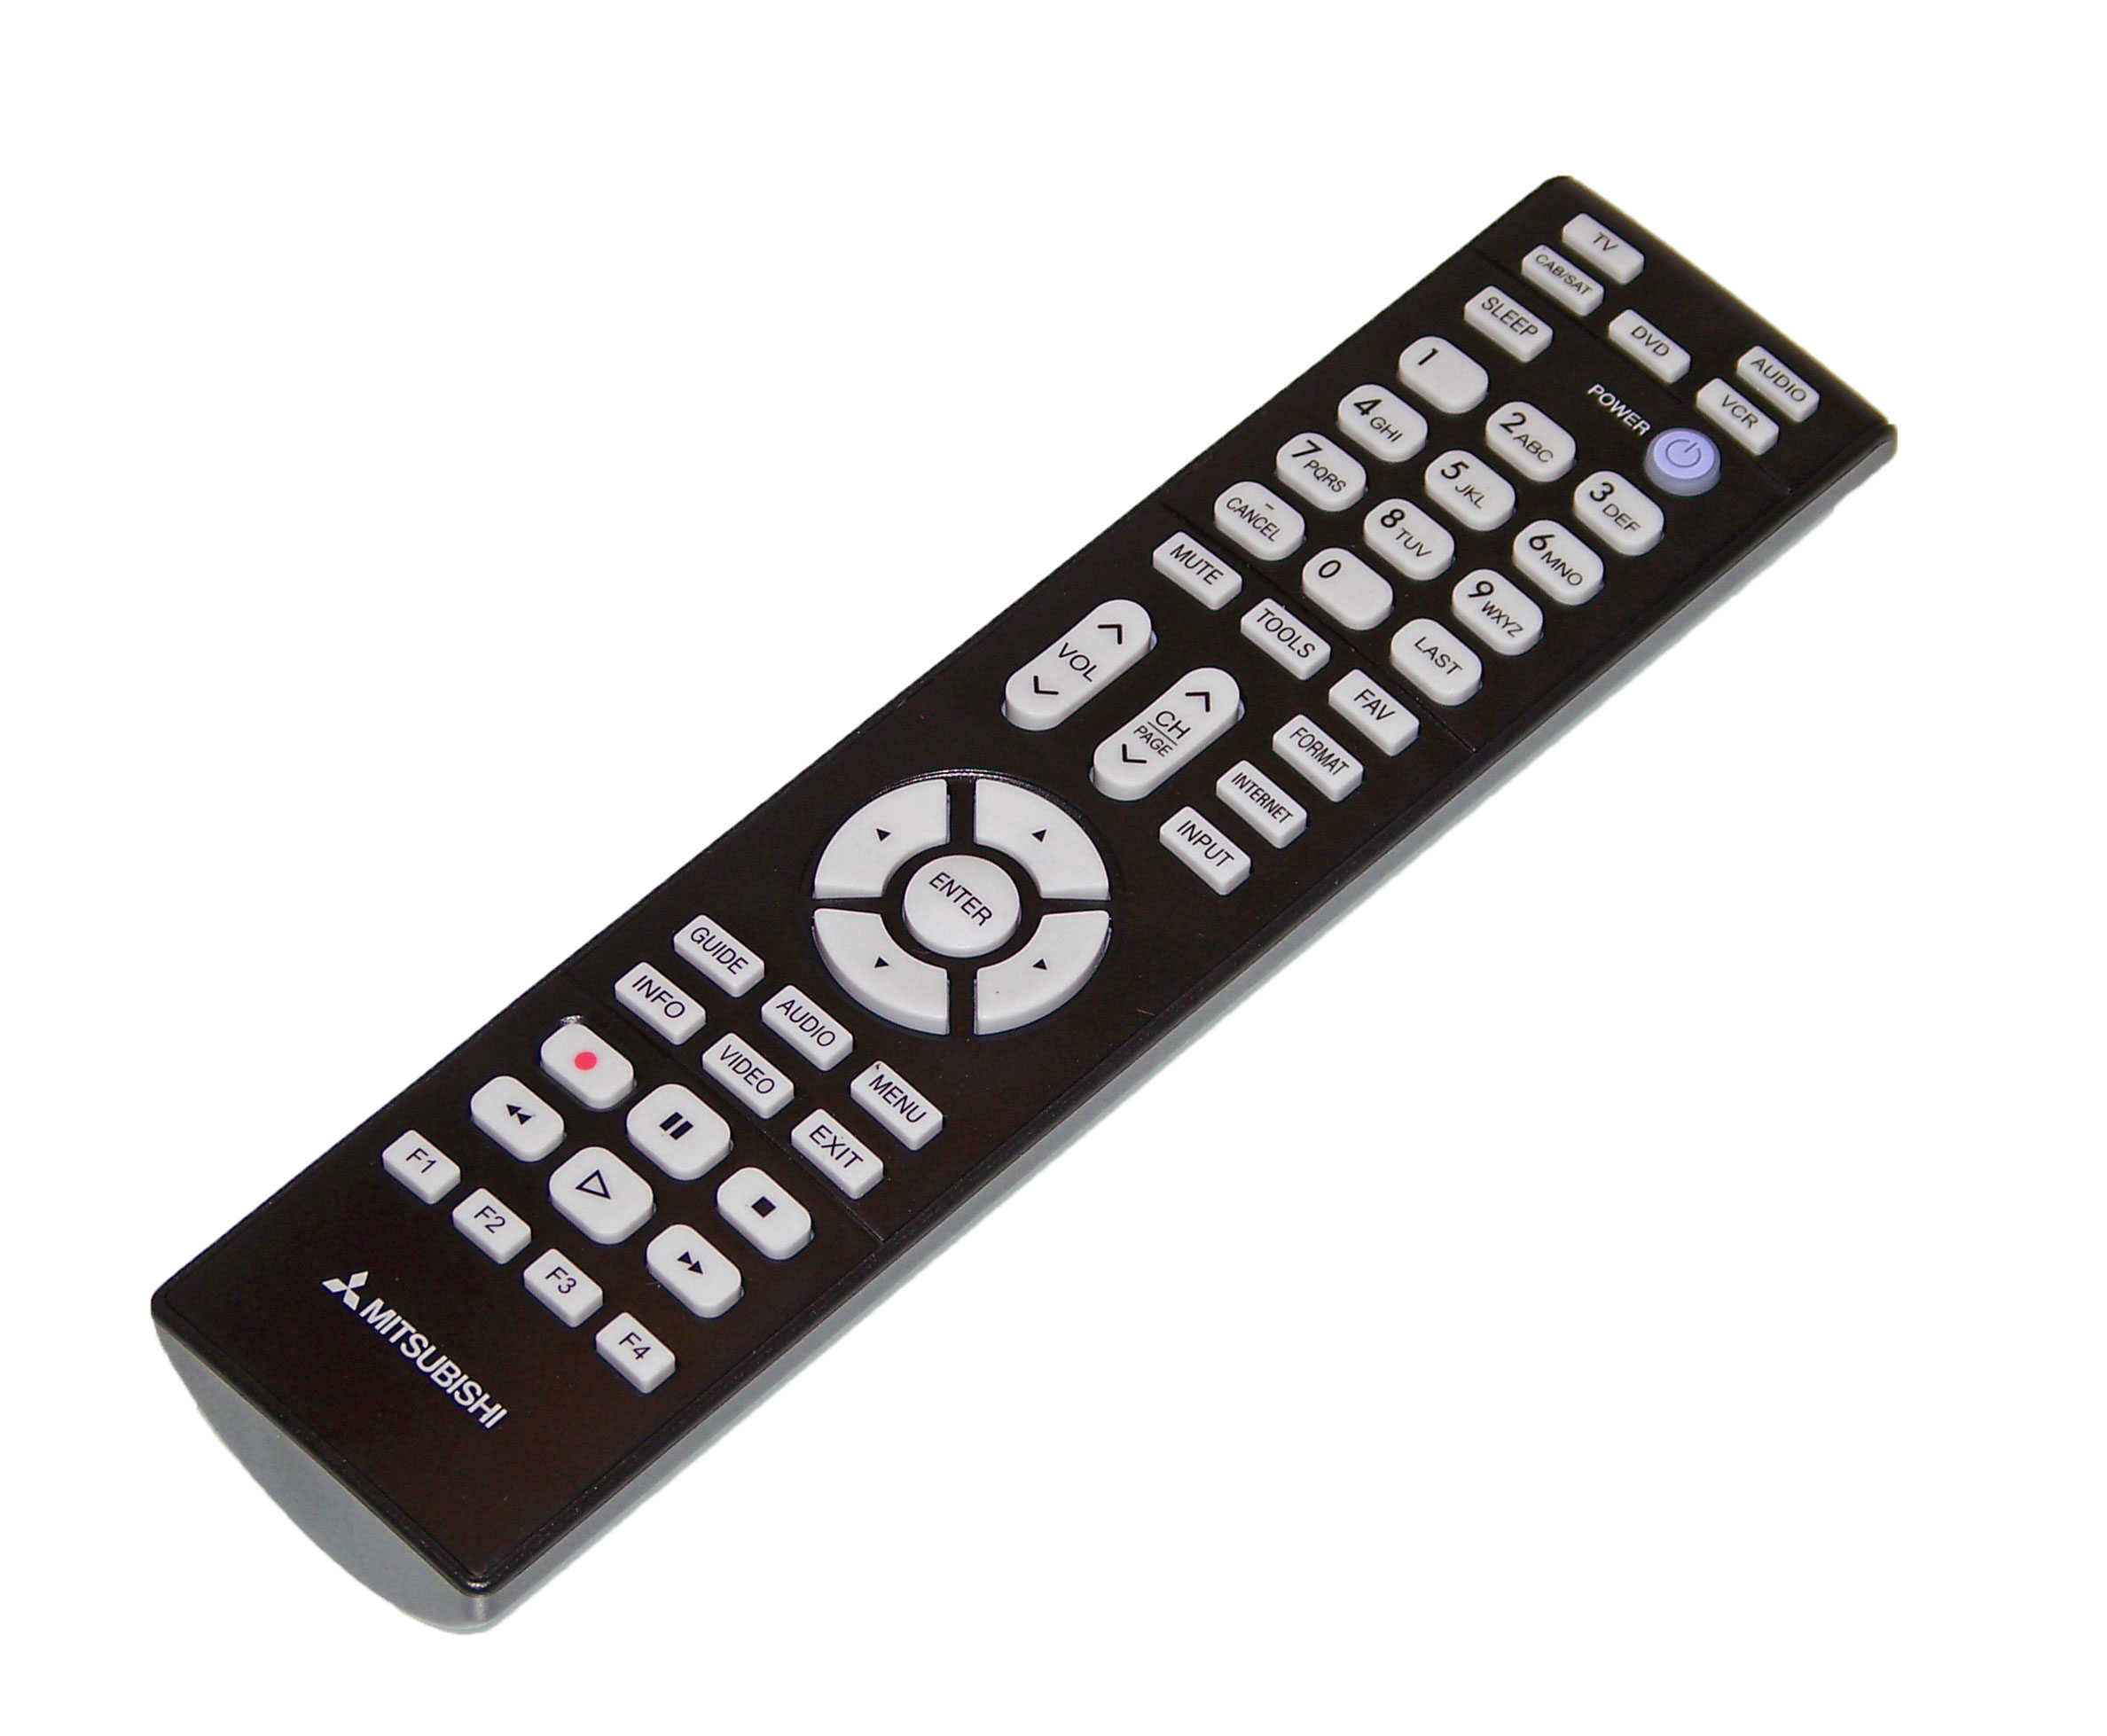 Tekswamp TV Remote Control for Mitsubishi LT-46144 